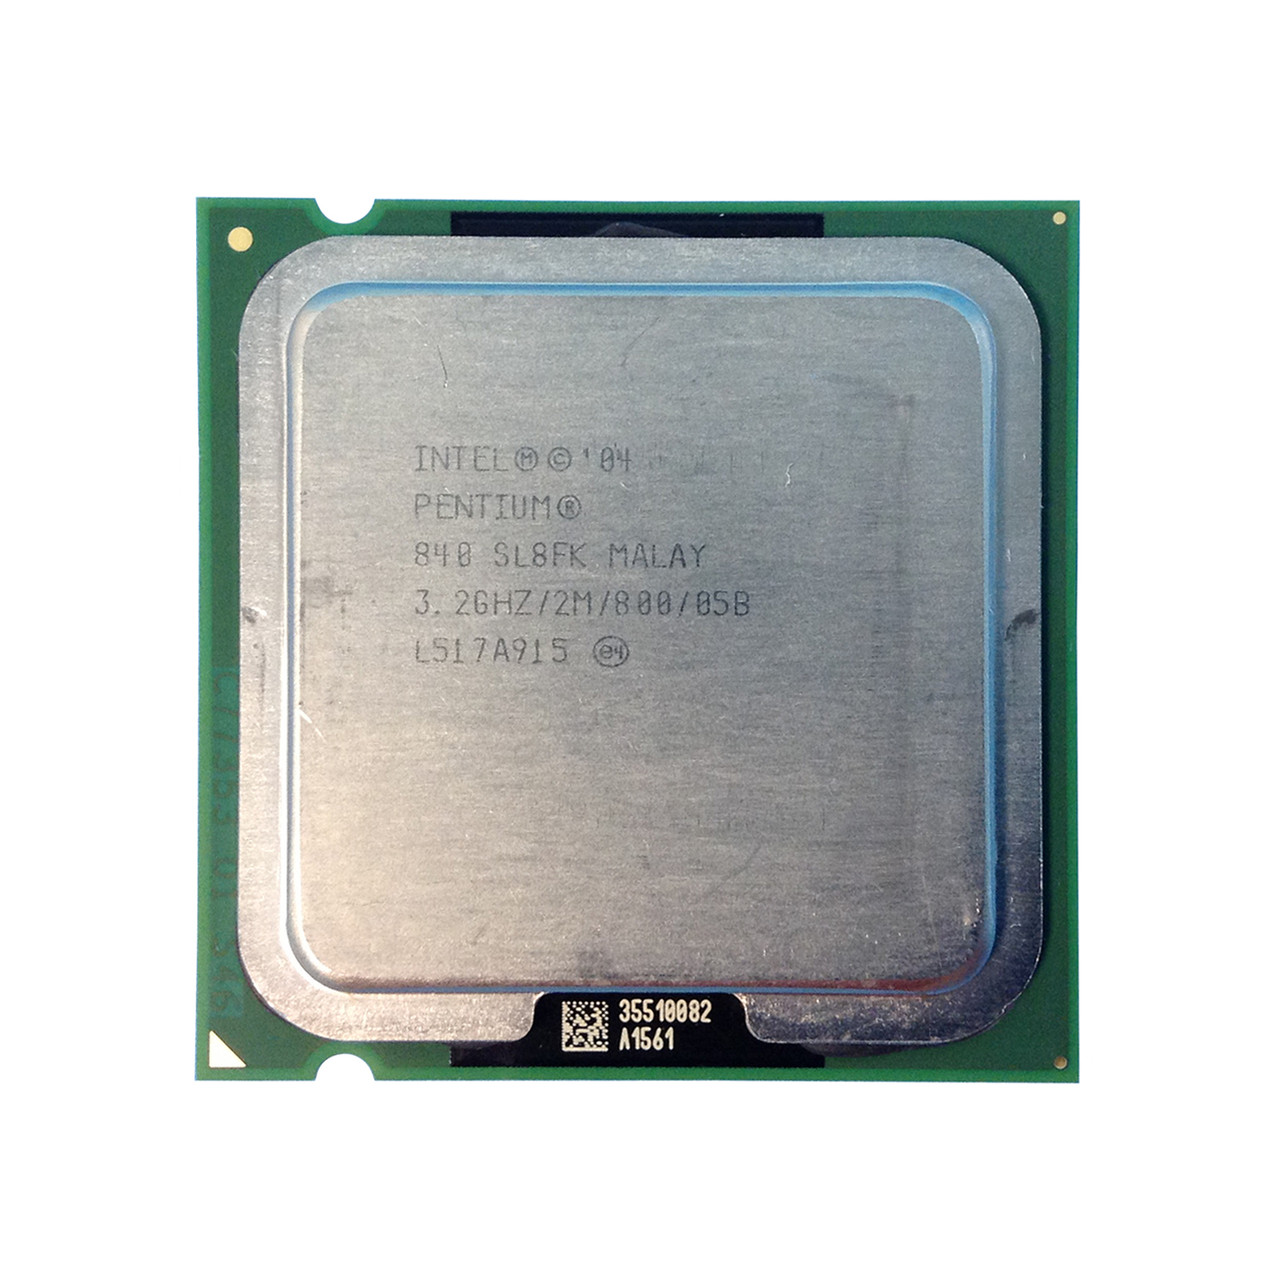 Dell FC150 Intel Extreme Edition 840 3.2Ghz 2MB 800FSB Processor